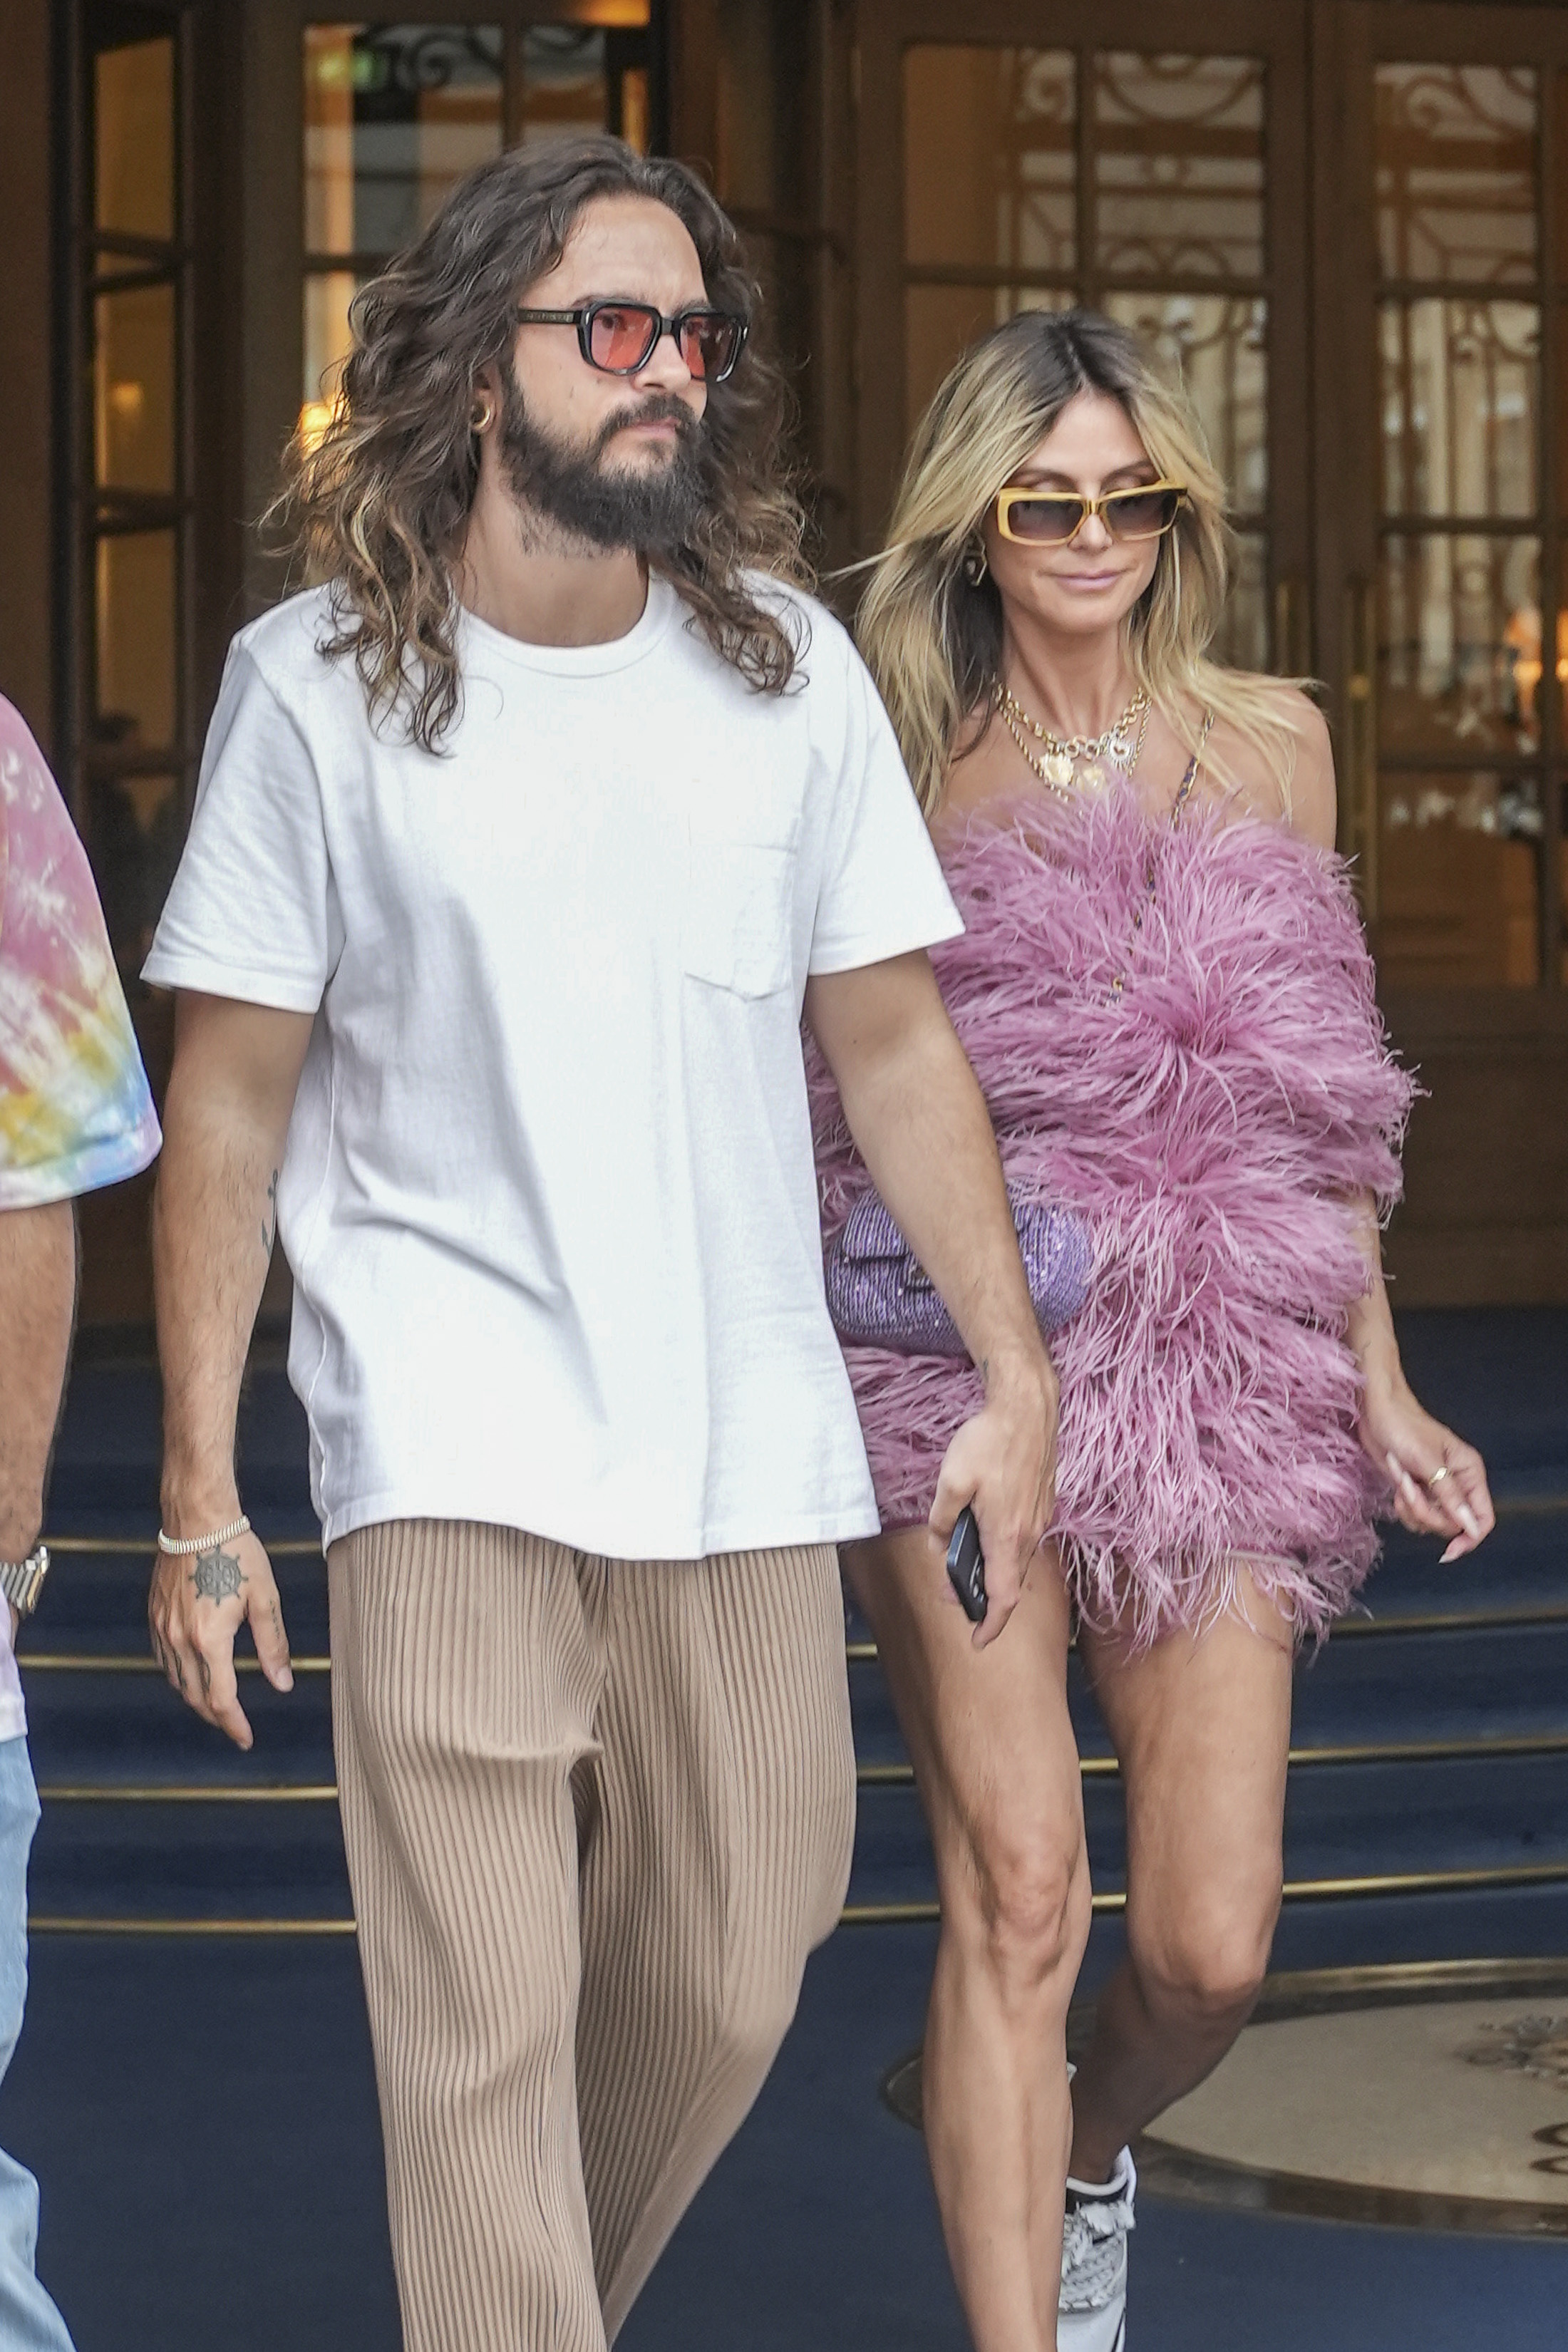 Heidi Klum and her husband Tom Kaulitz have enjoyed time together in Italy